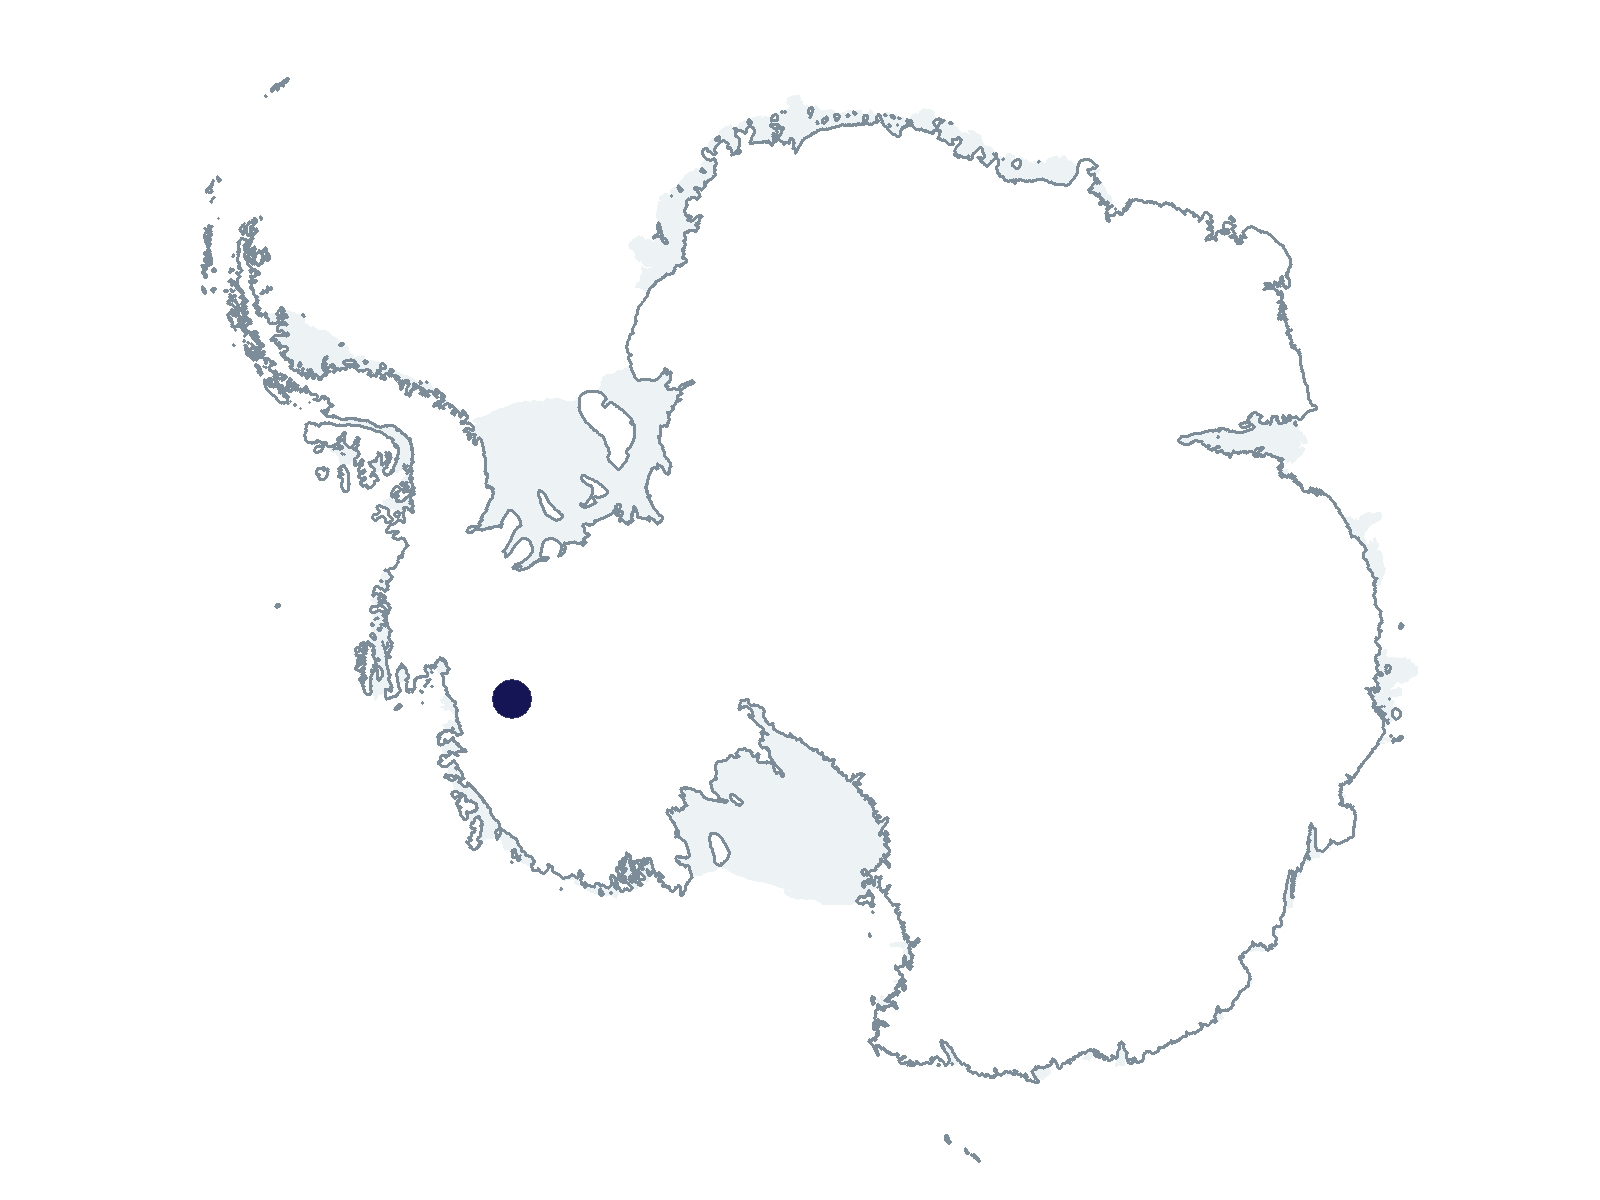 C-442-M Research Location(s): Thwaites Glacier